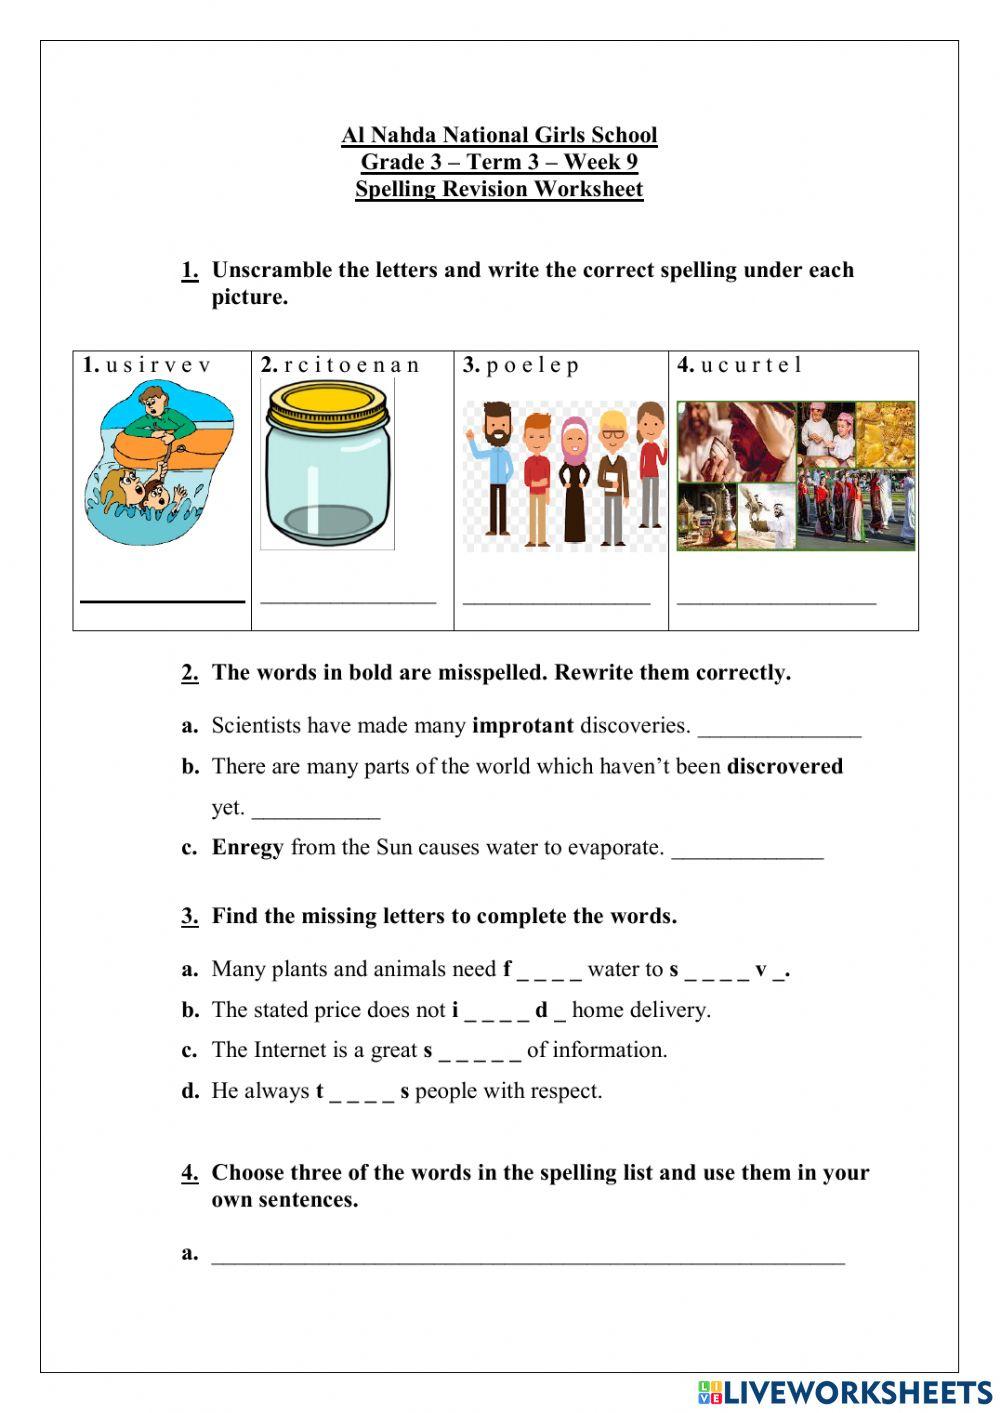 Spelling Revision Worksheet